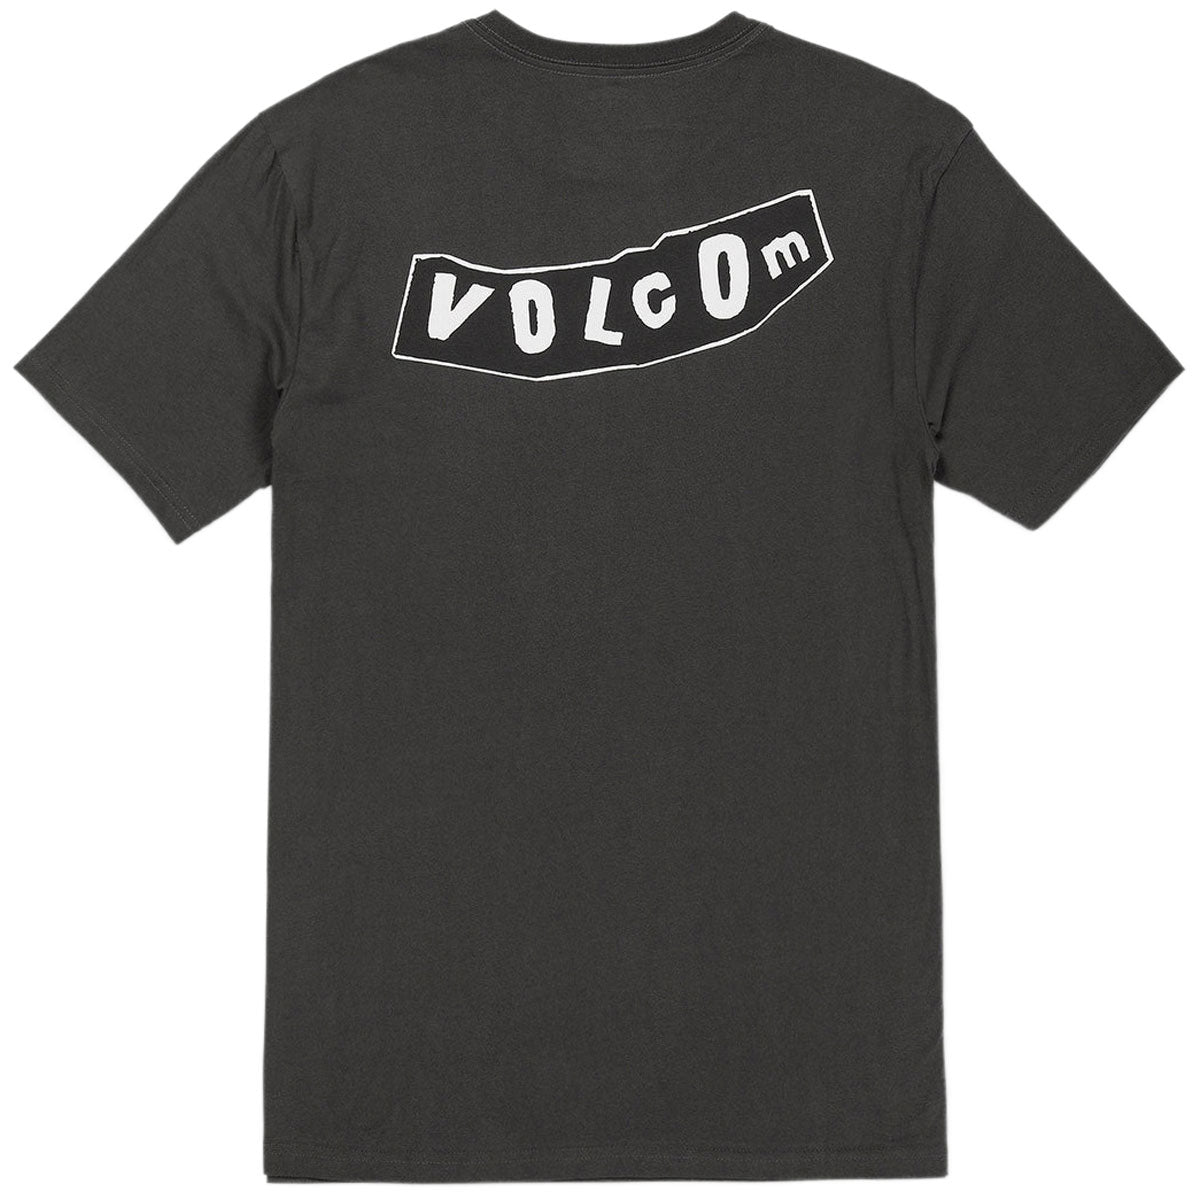 Volcom Skate Vitals Originator T-Shirt - Vintage Black image 2